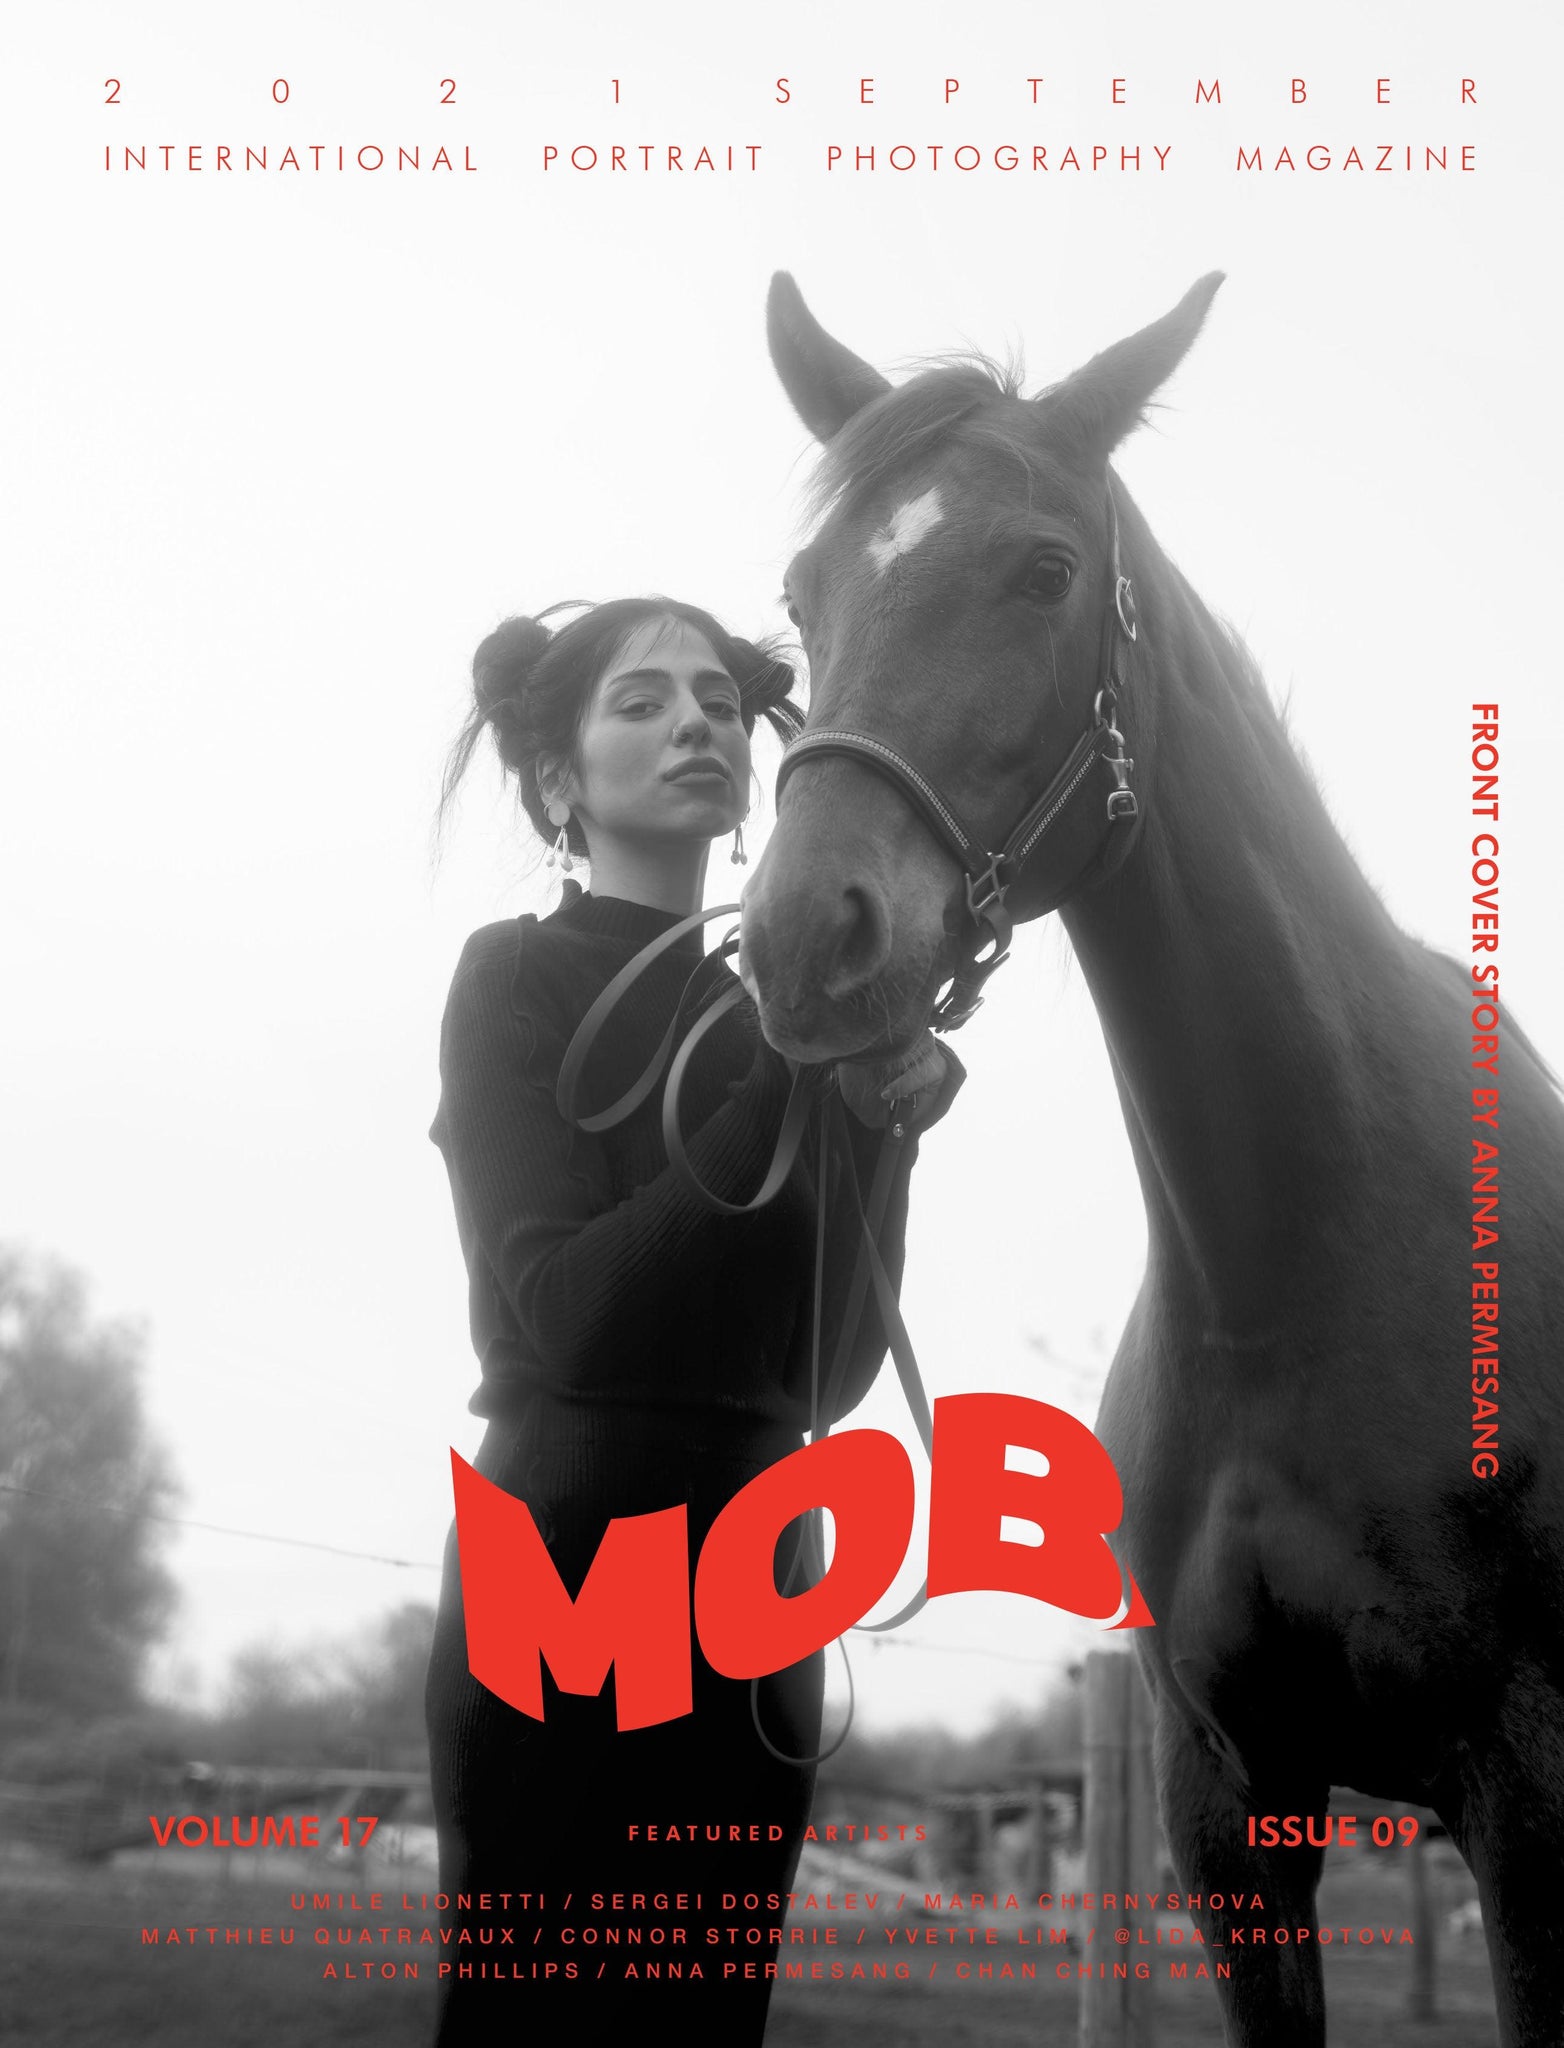 MOB JOURNAL | VOLUME SEVENTEEN | ISSUE #09 - Mob Journal